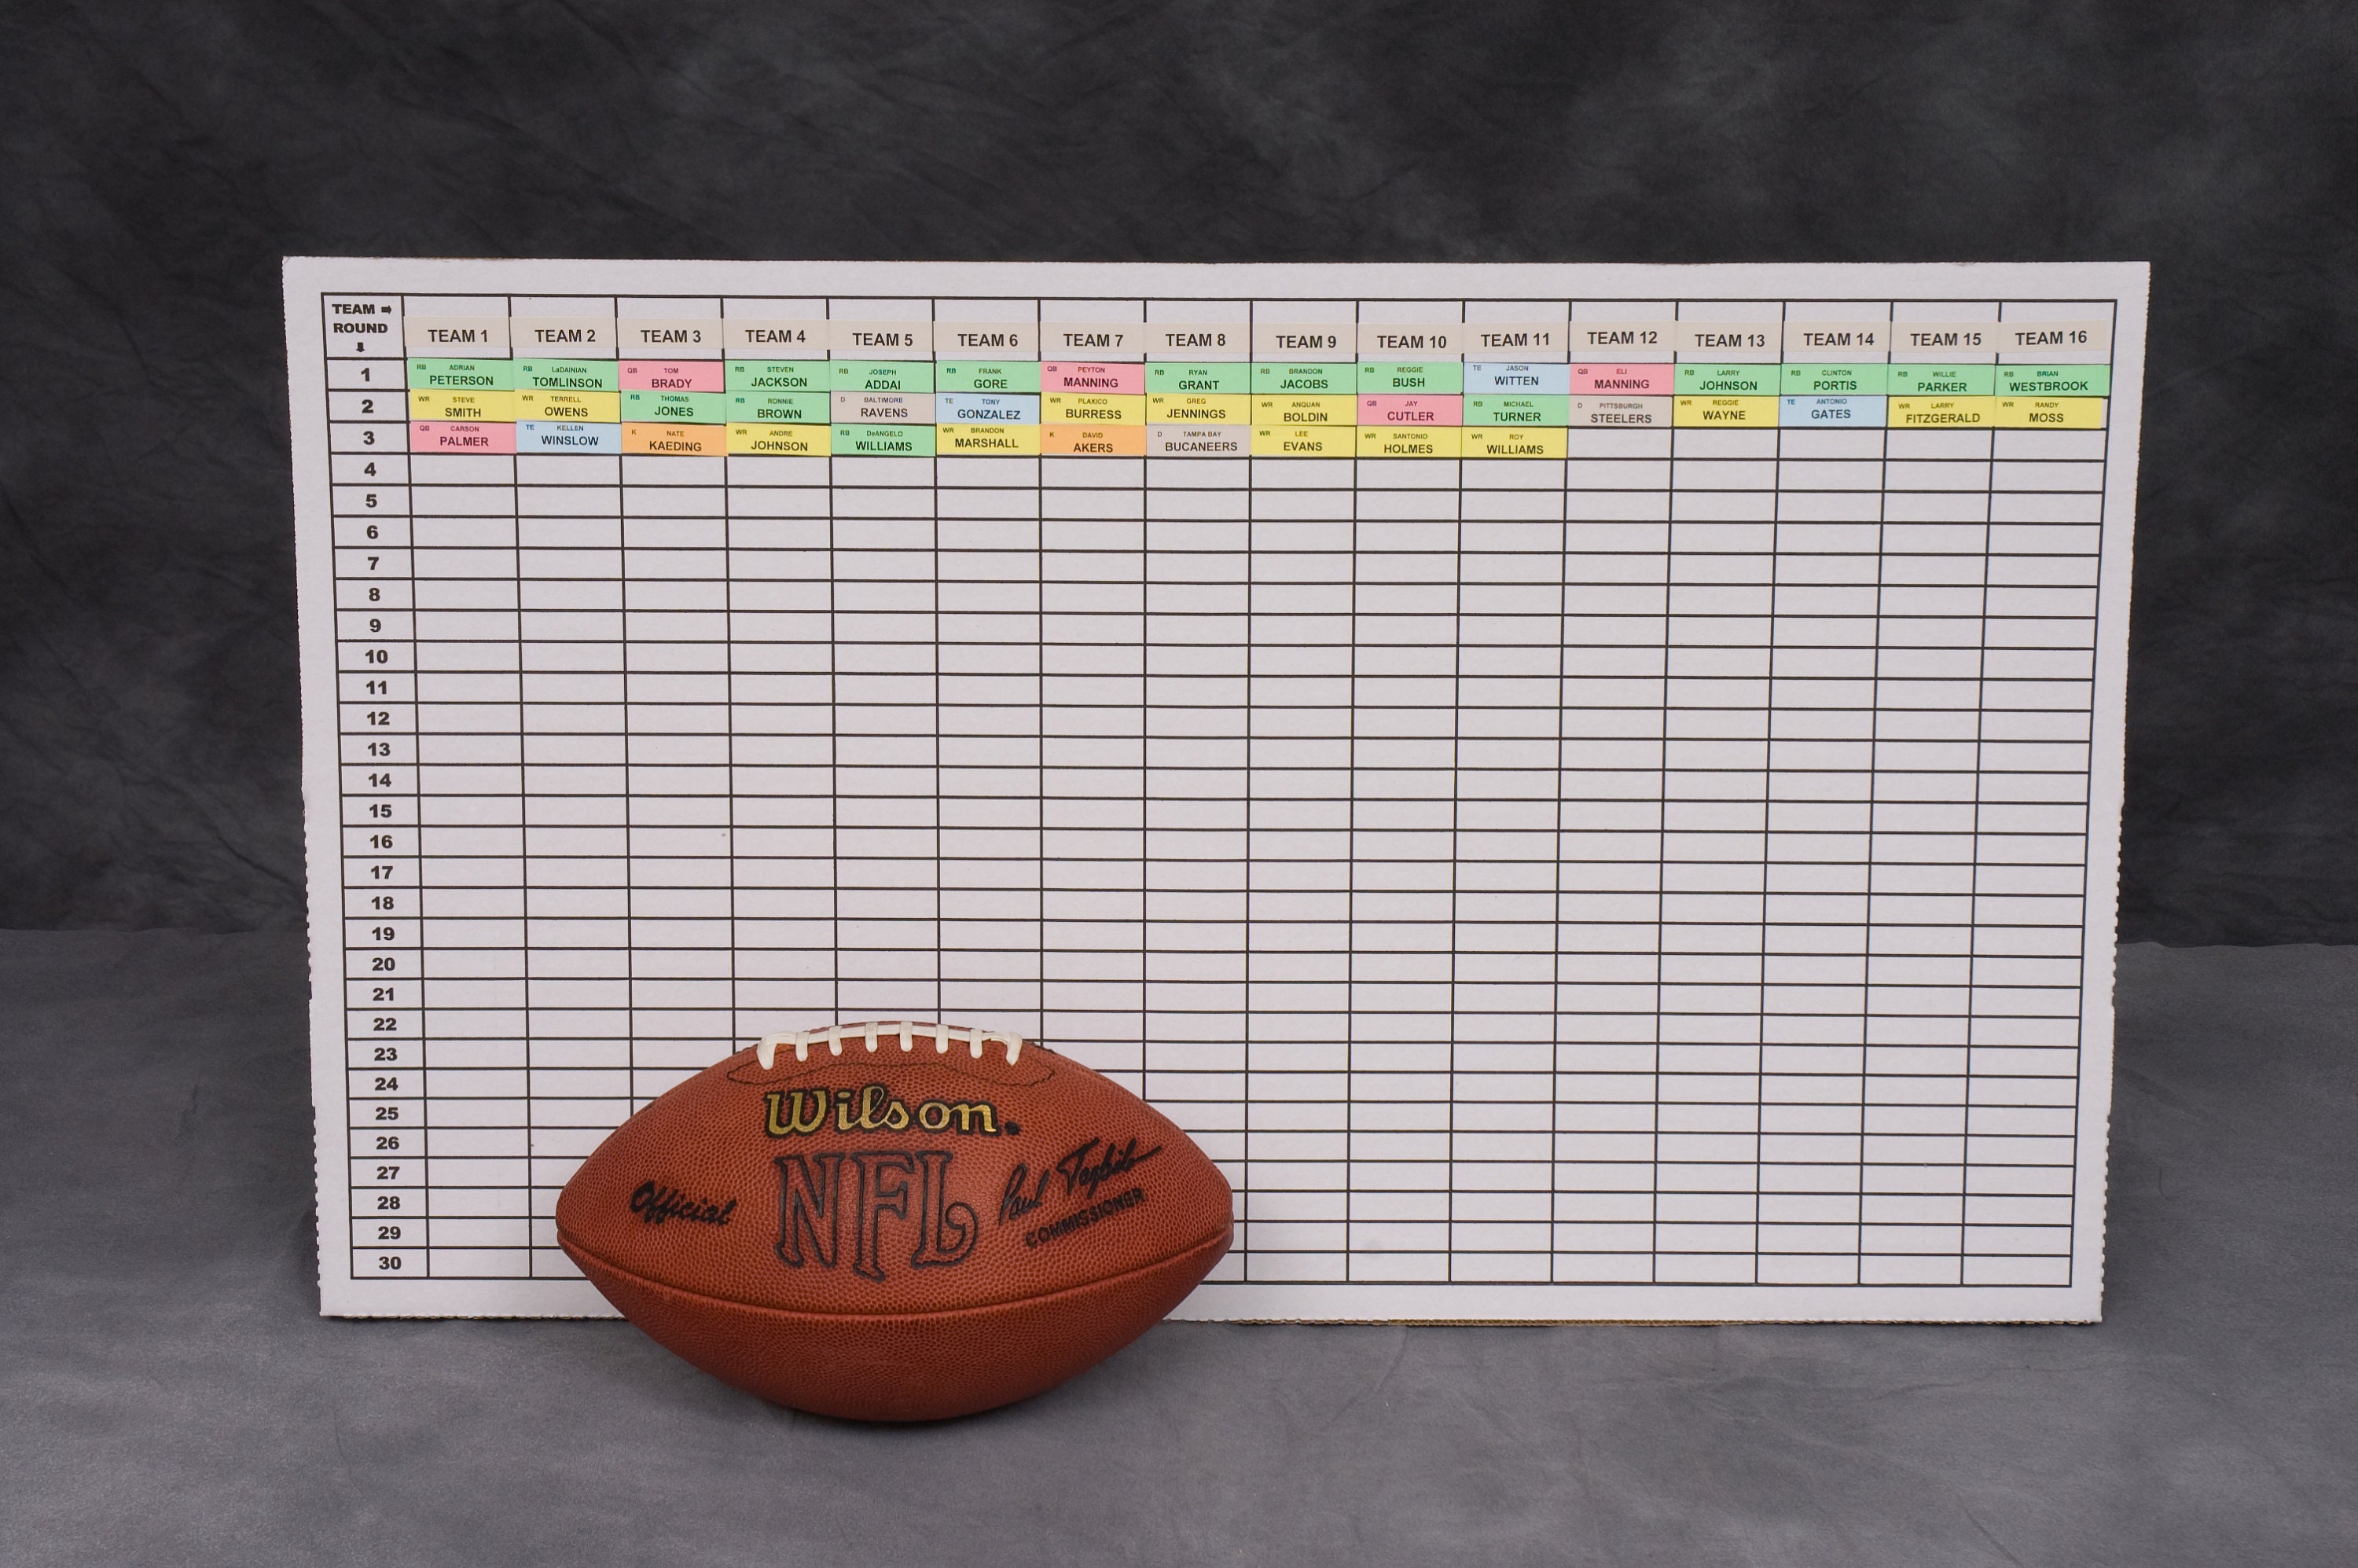 23 Fantasy Football Draft Board + Labels